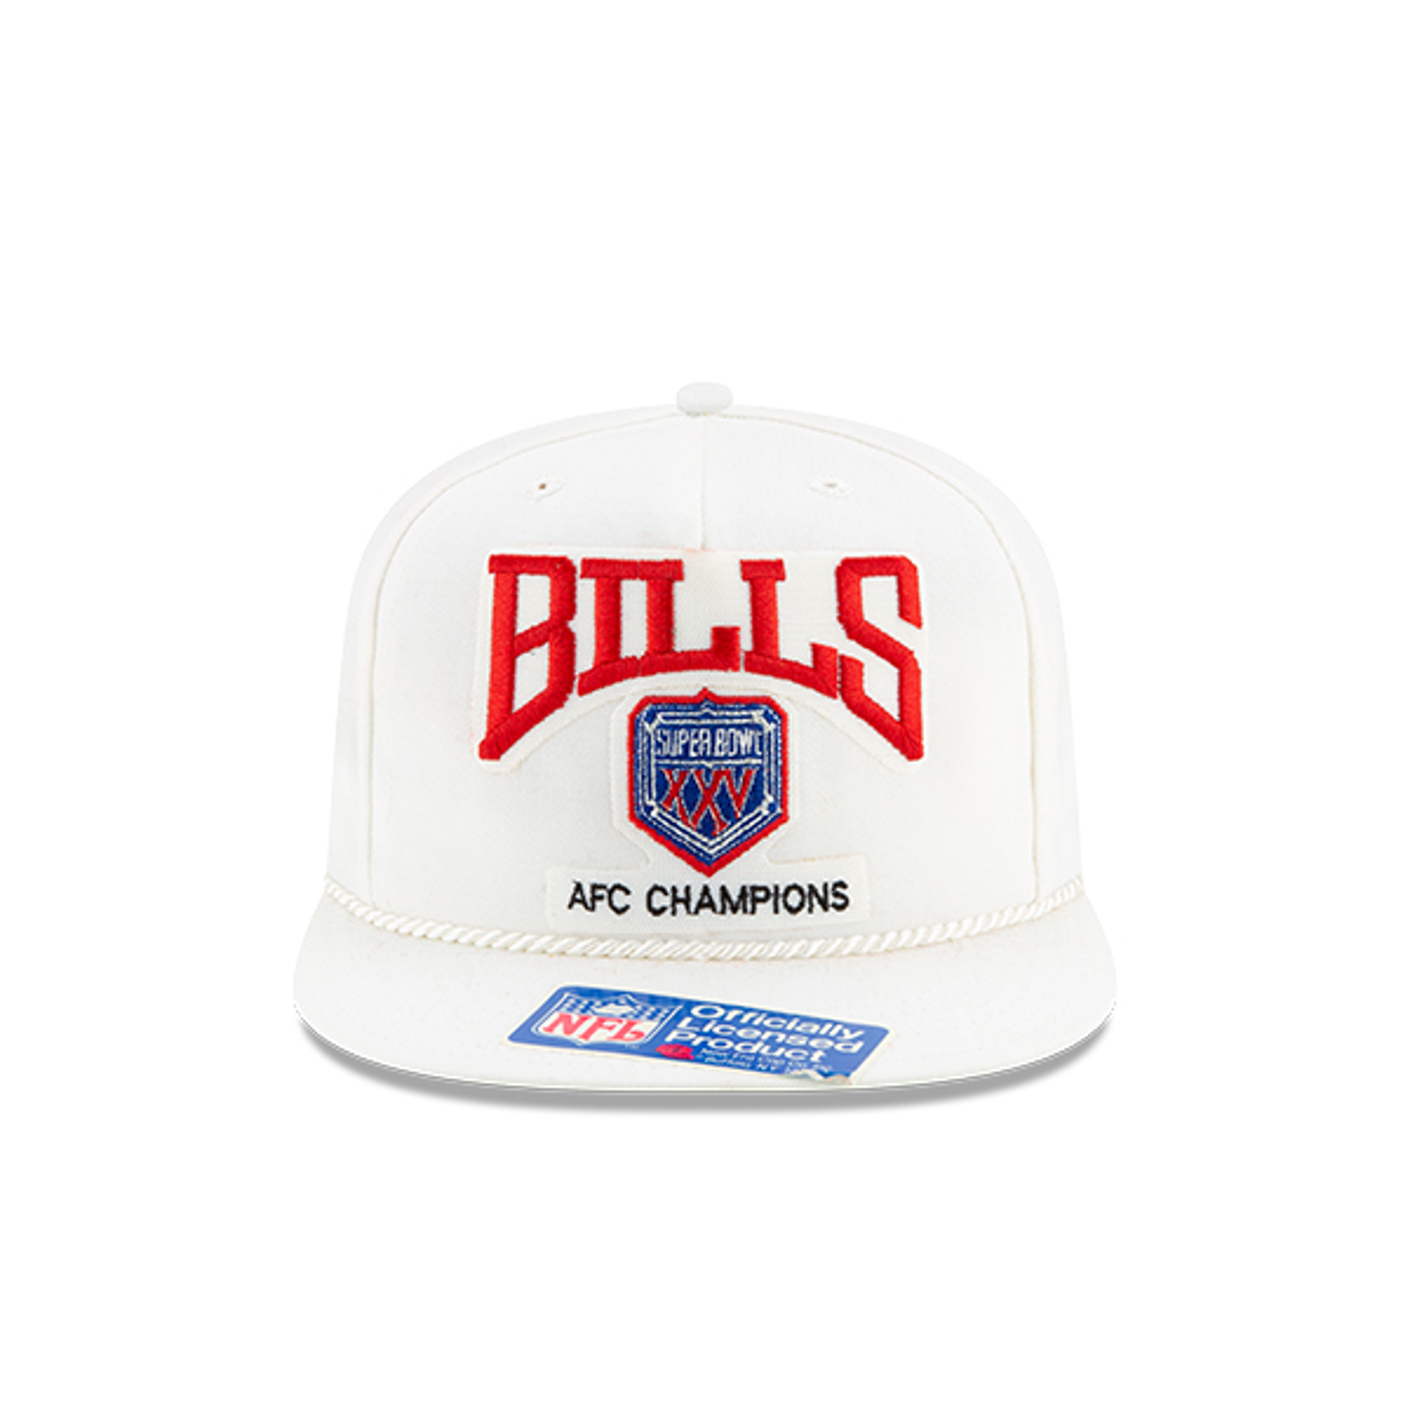 1992 Buffalo Bills "AFC Champions" Fan Cap